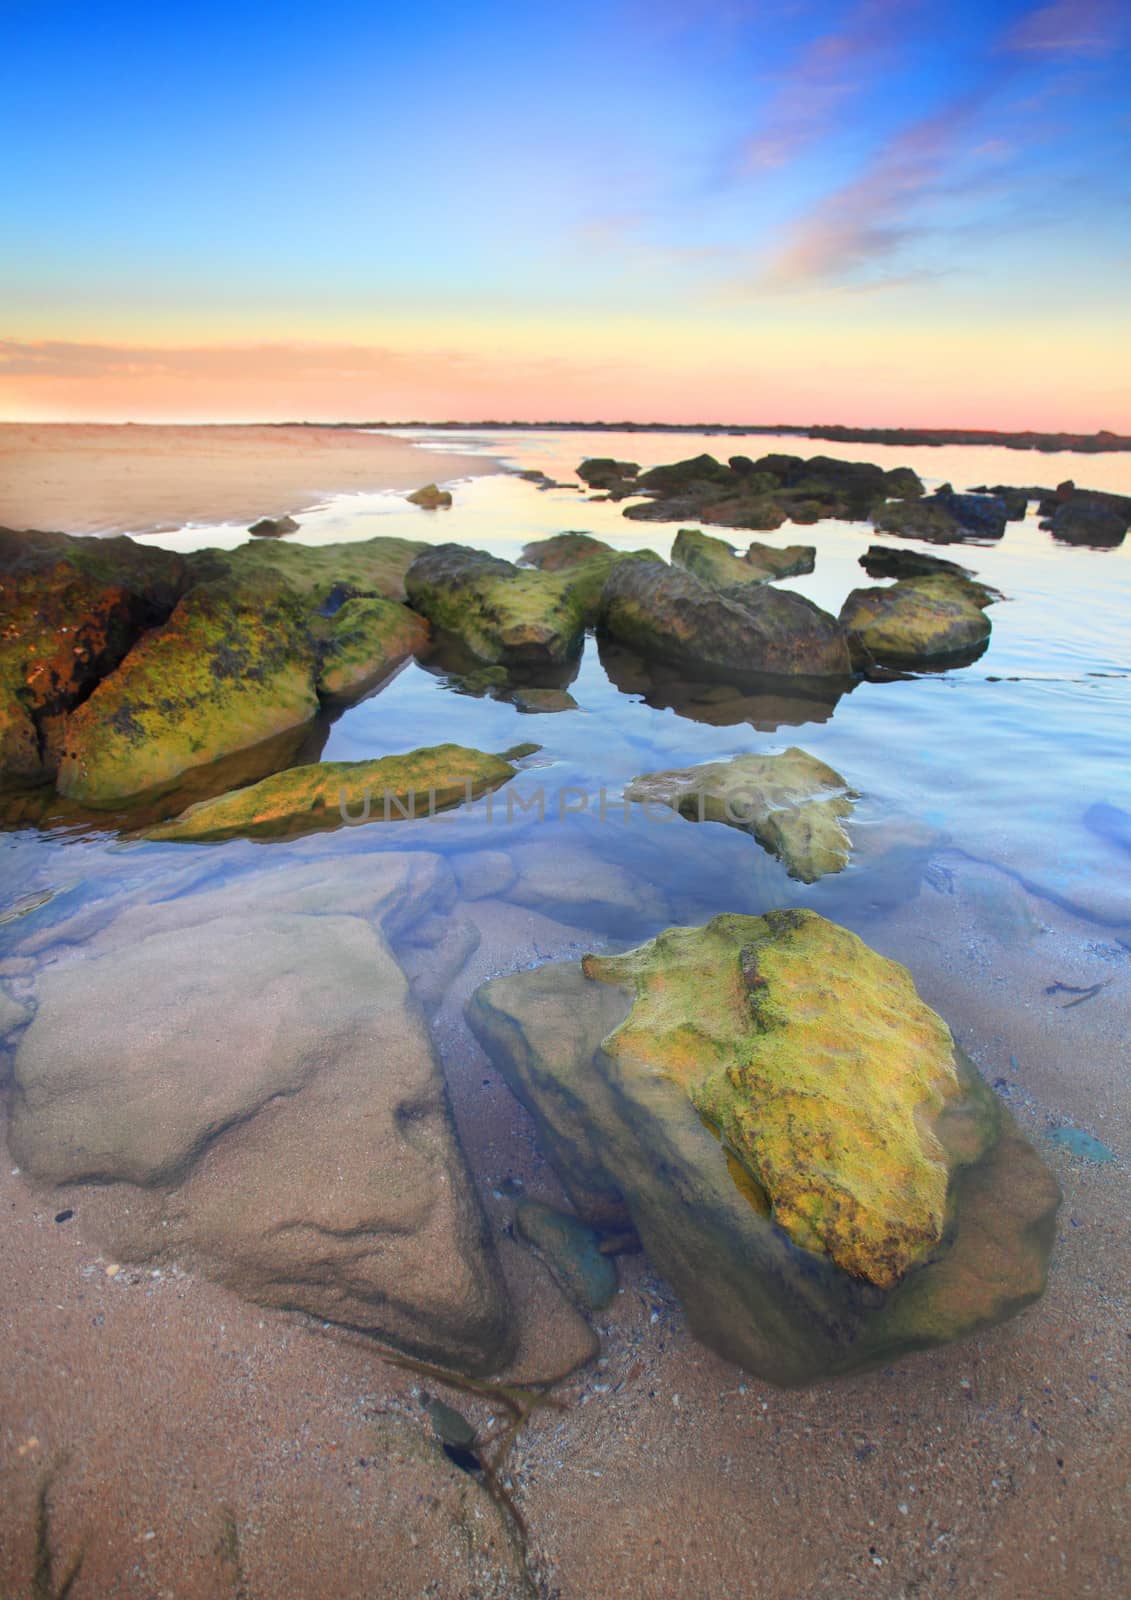 Sunset Toowoon Bay, Australia by lovleah